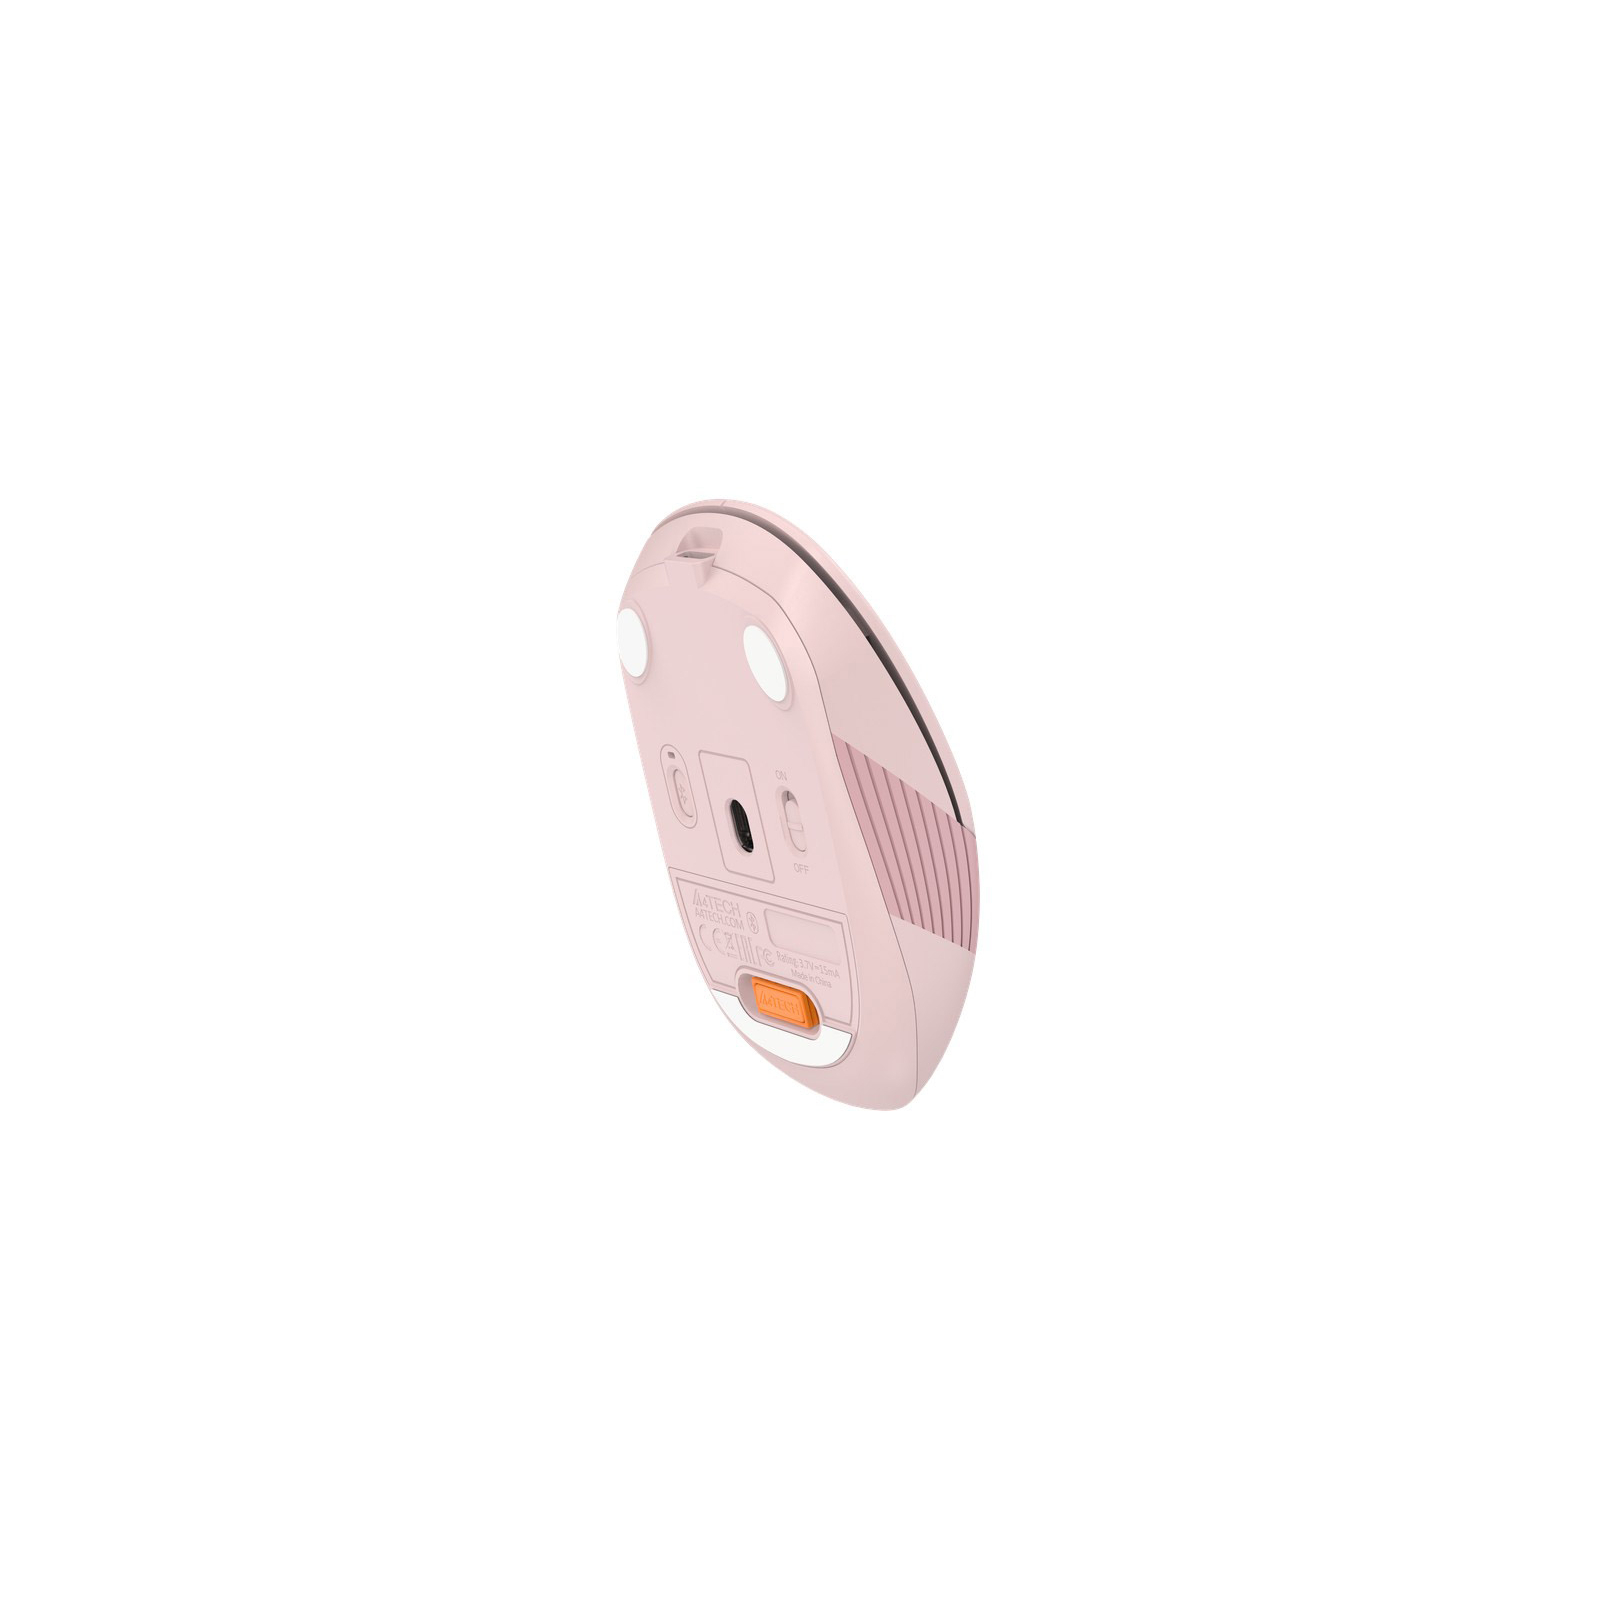 Мышка A4Tech FB10C Wireless/Bluetooth Pink (FB10C Pink) изображение 9